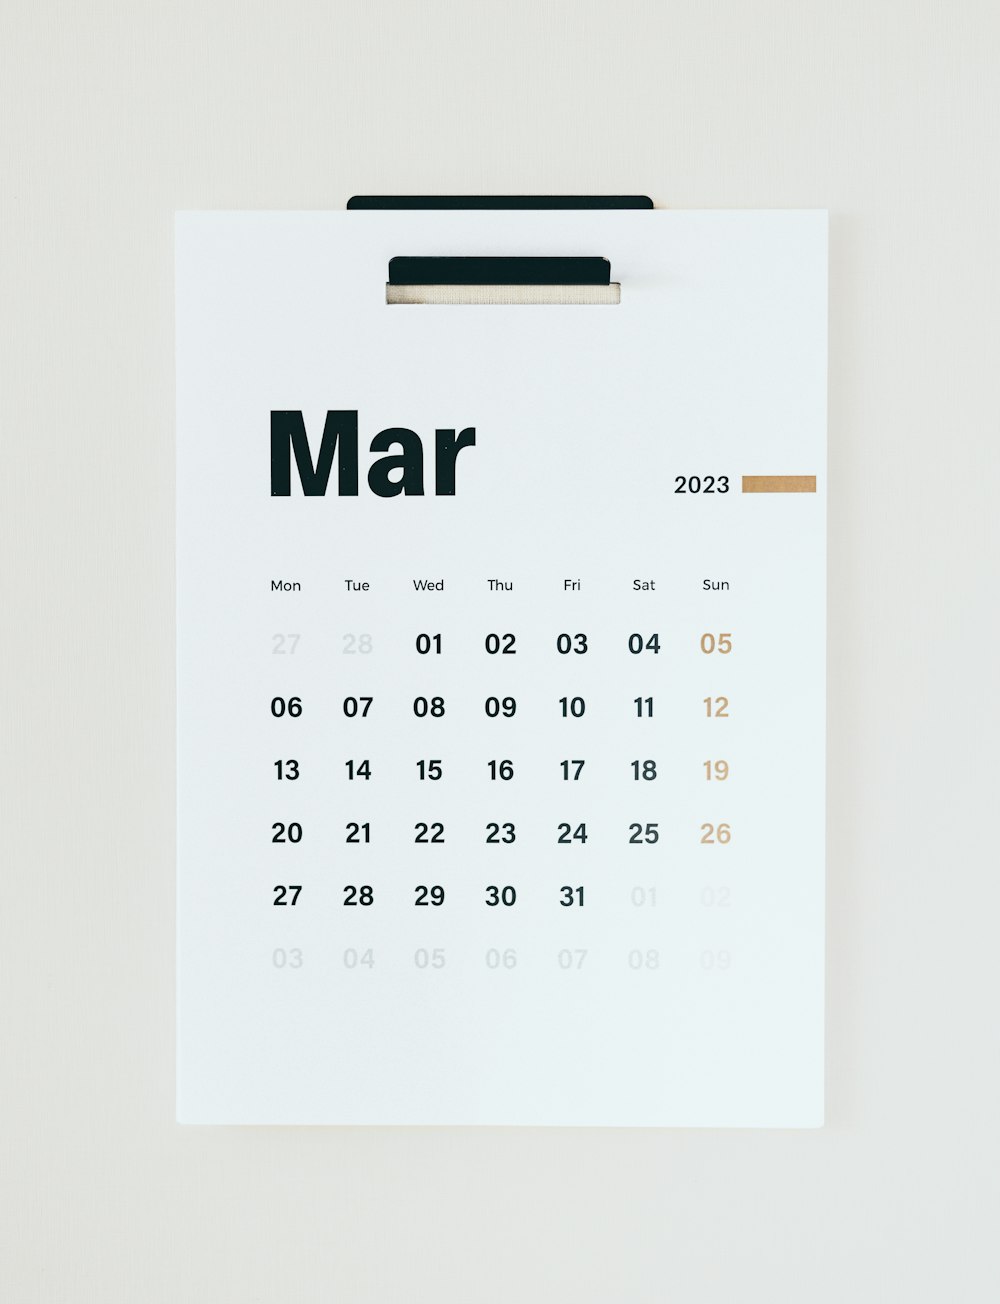 Mar という単語が書かれたカレンダー